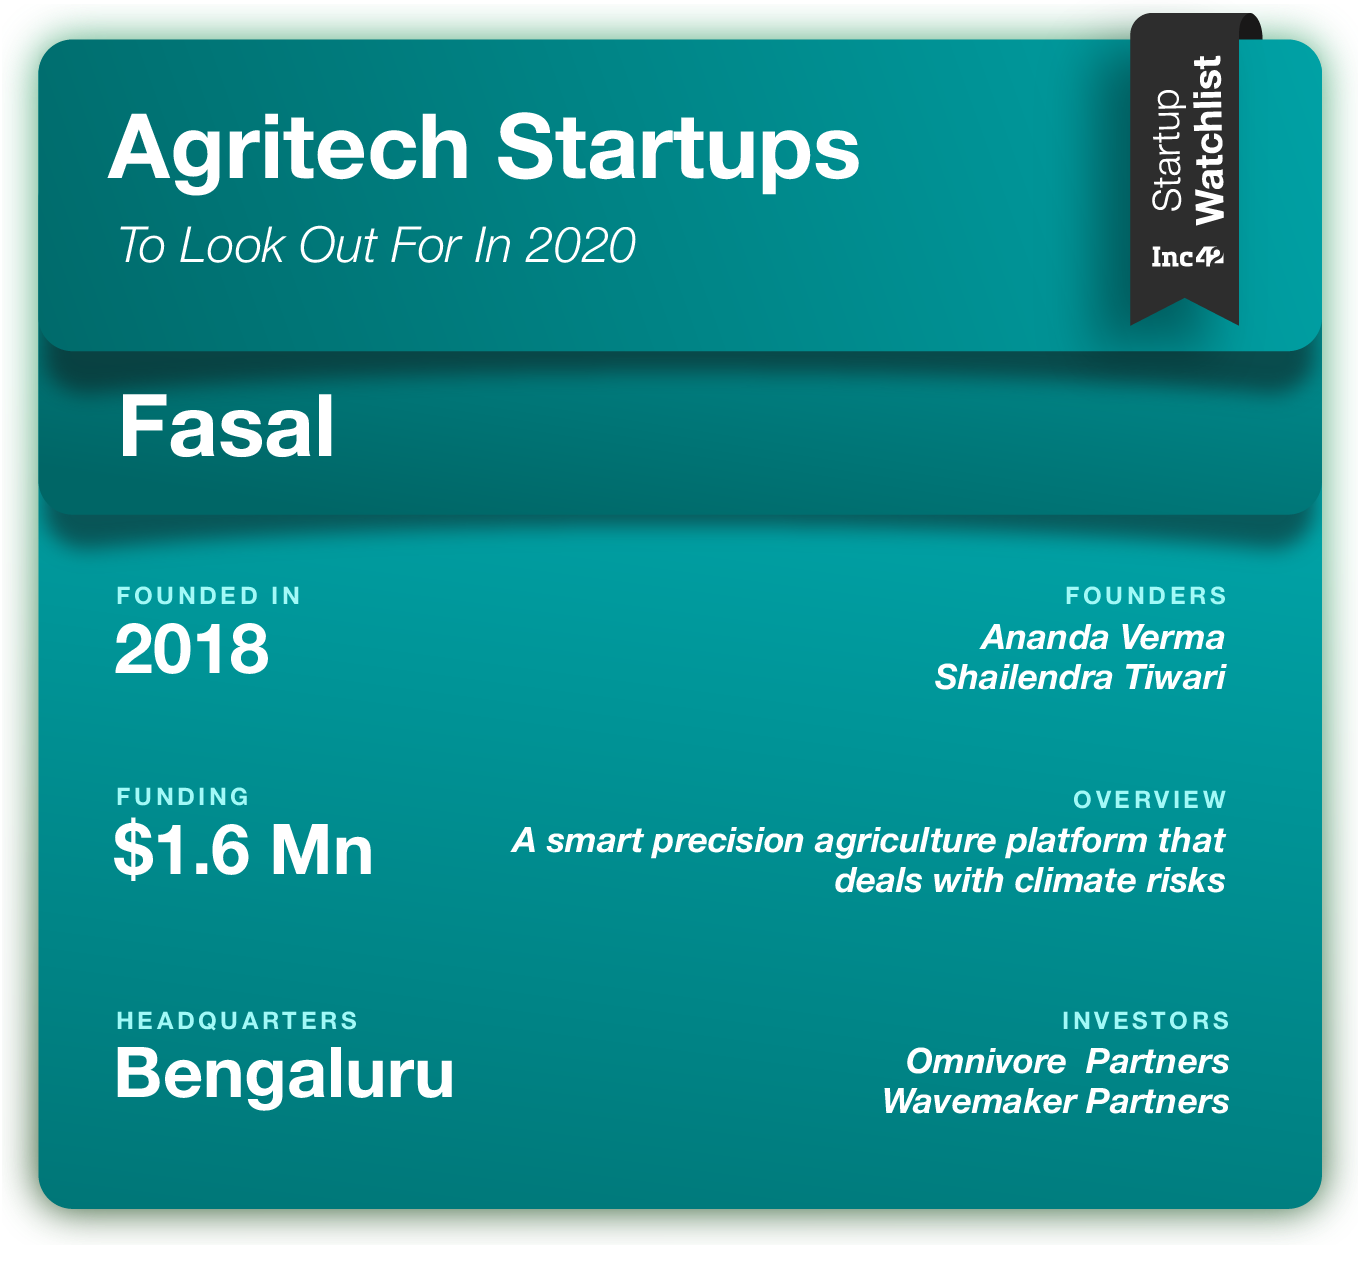 Fasal agritech startups